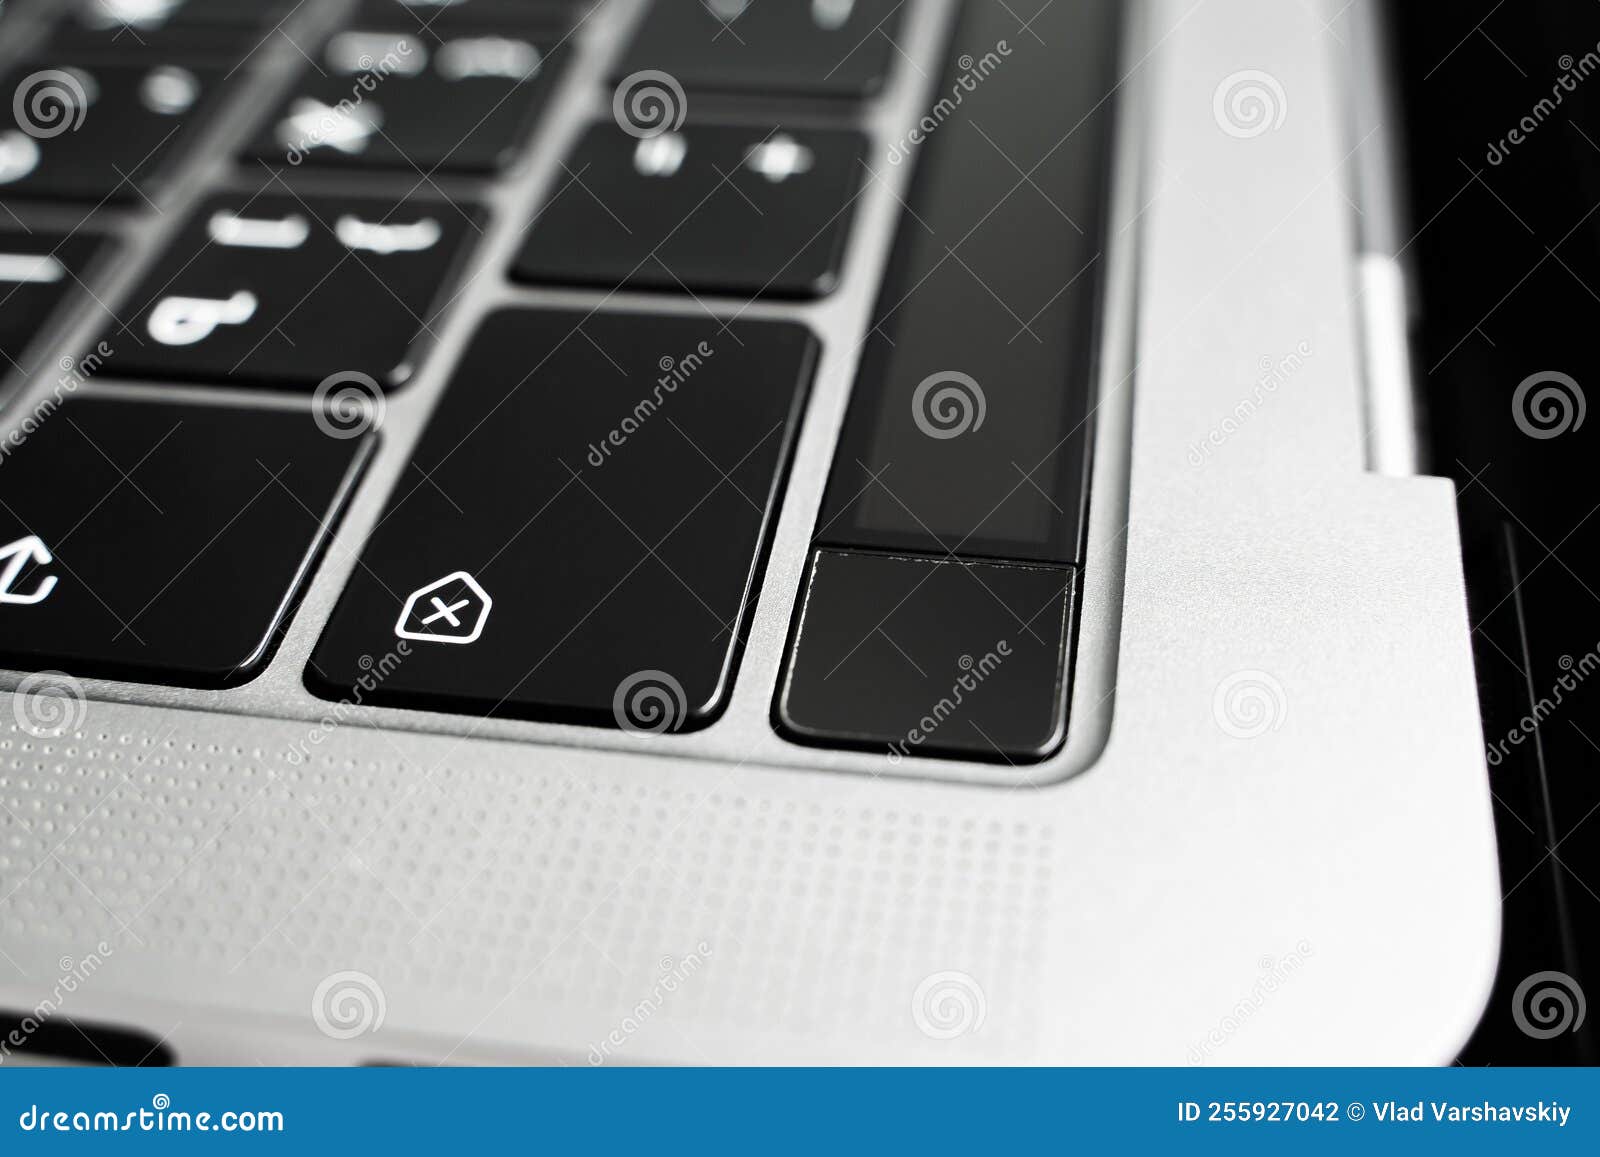 kiev, ukraine - august 9, 2022: fingerprint sensor on macbook pro with touchbar close up. touch id on apple laptop